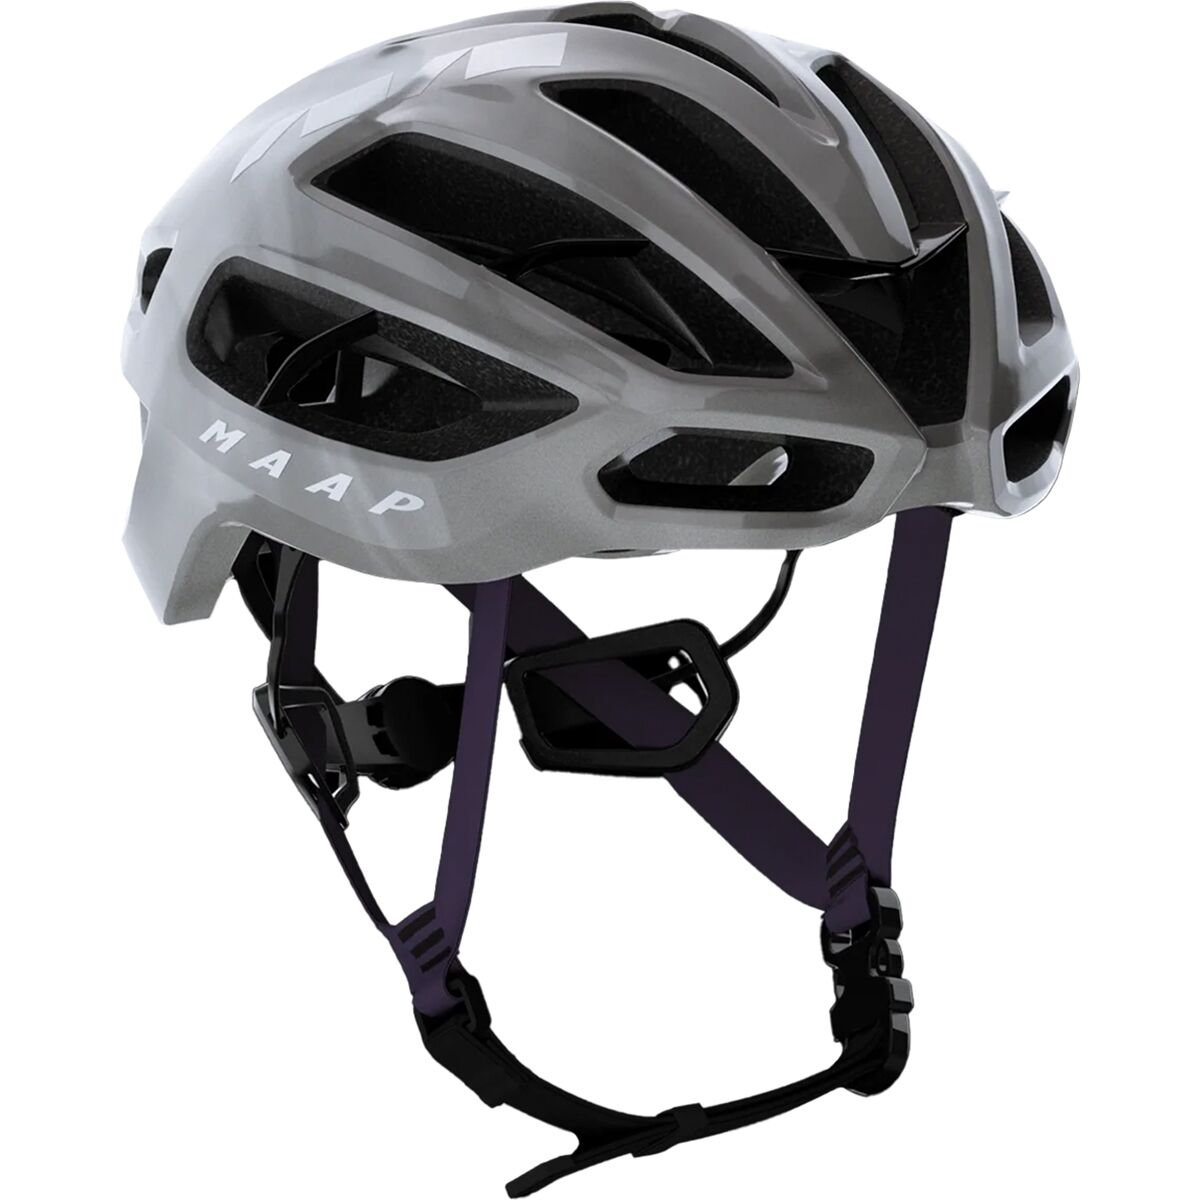 x KASK Protone Icon Helmet MAAP